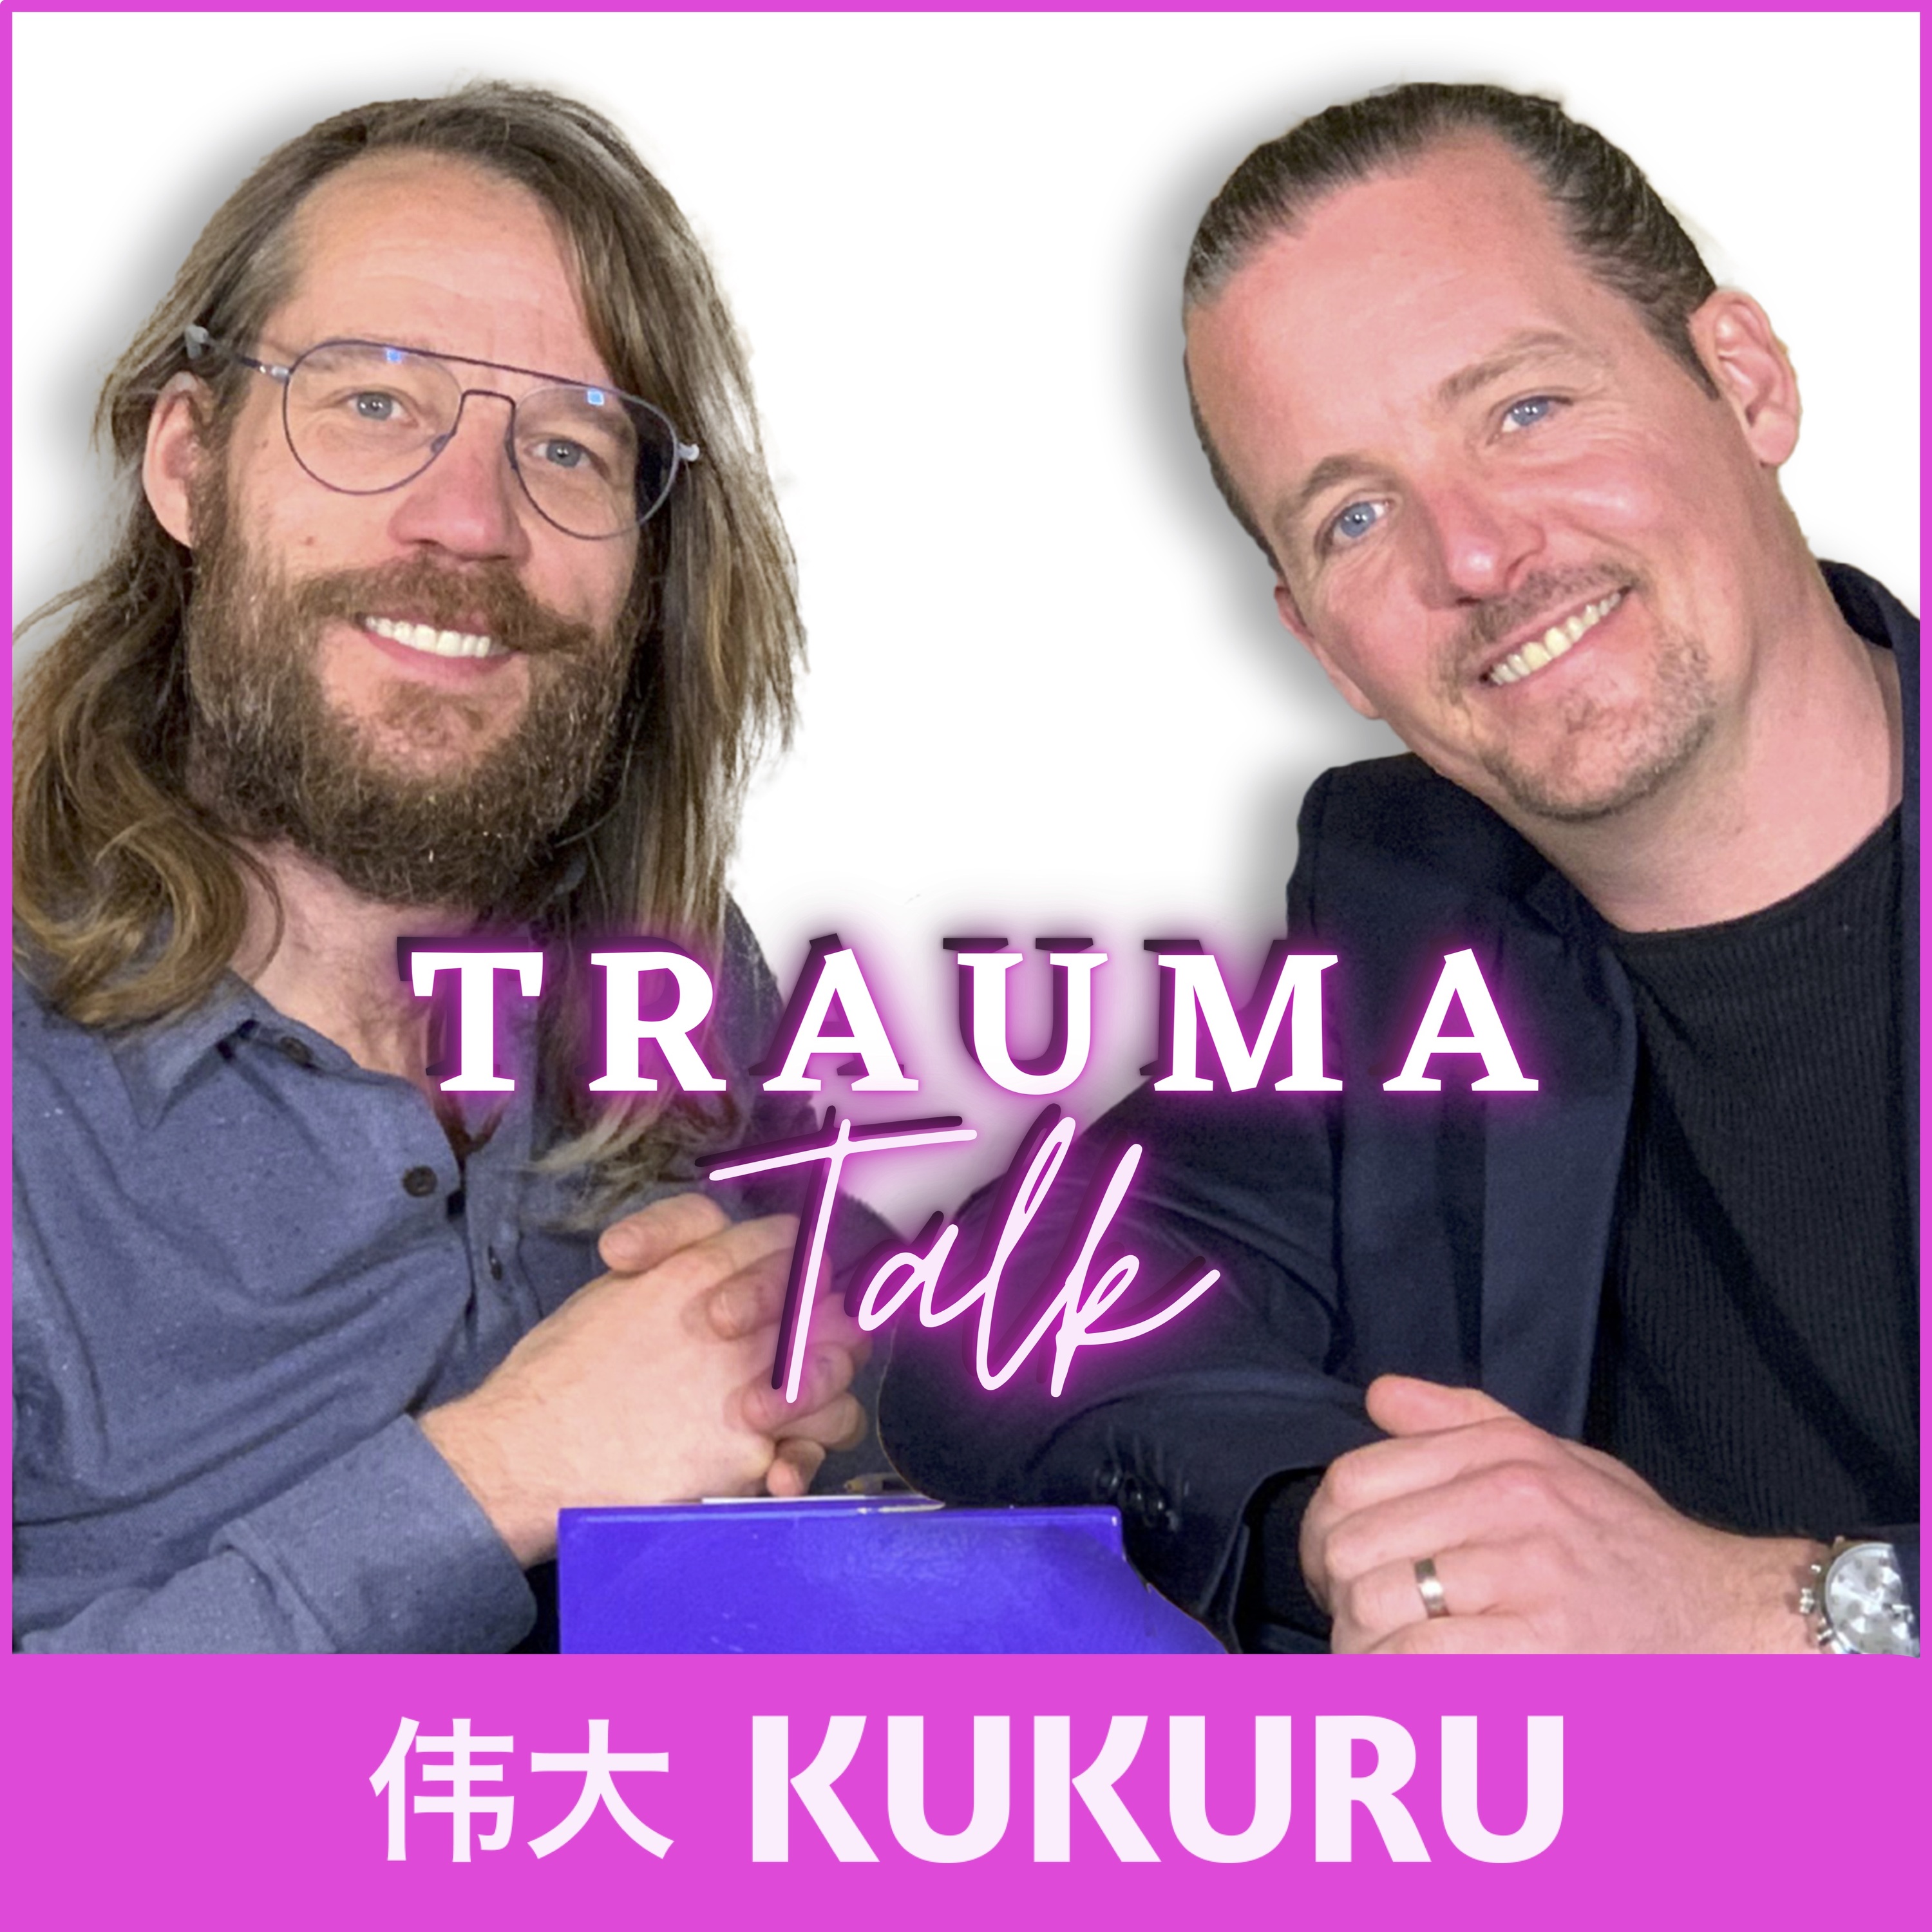 De oorzaken van trauma’s - Trauma Talk #3